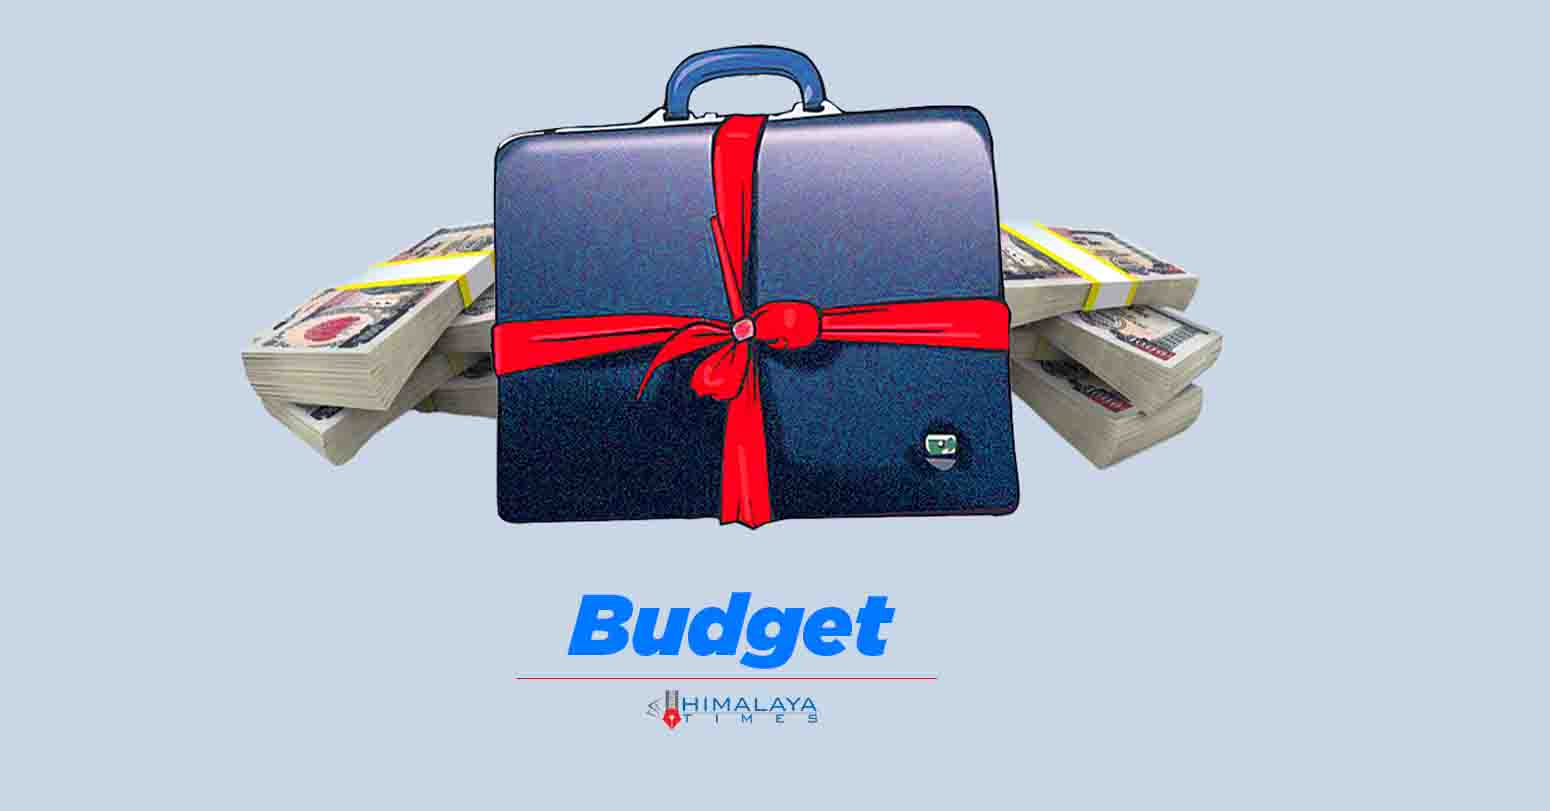 Budget…